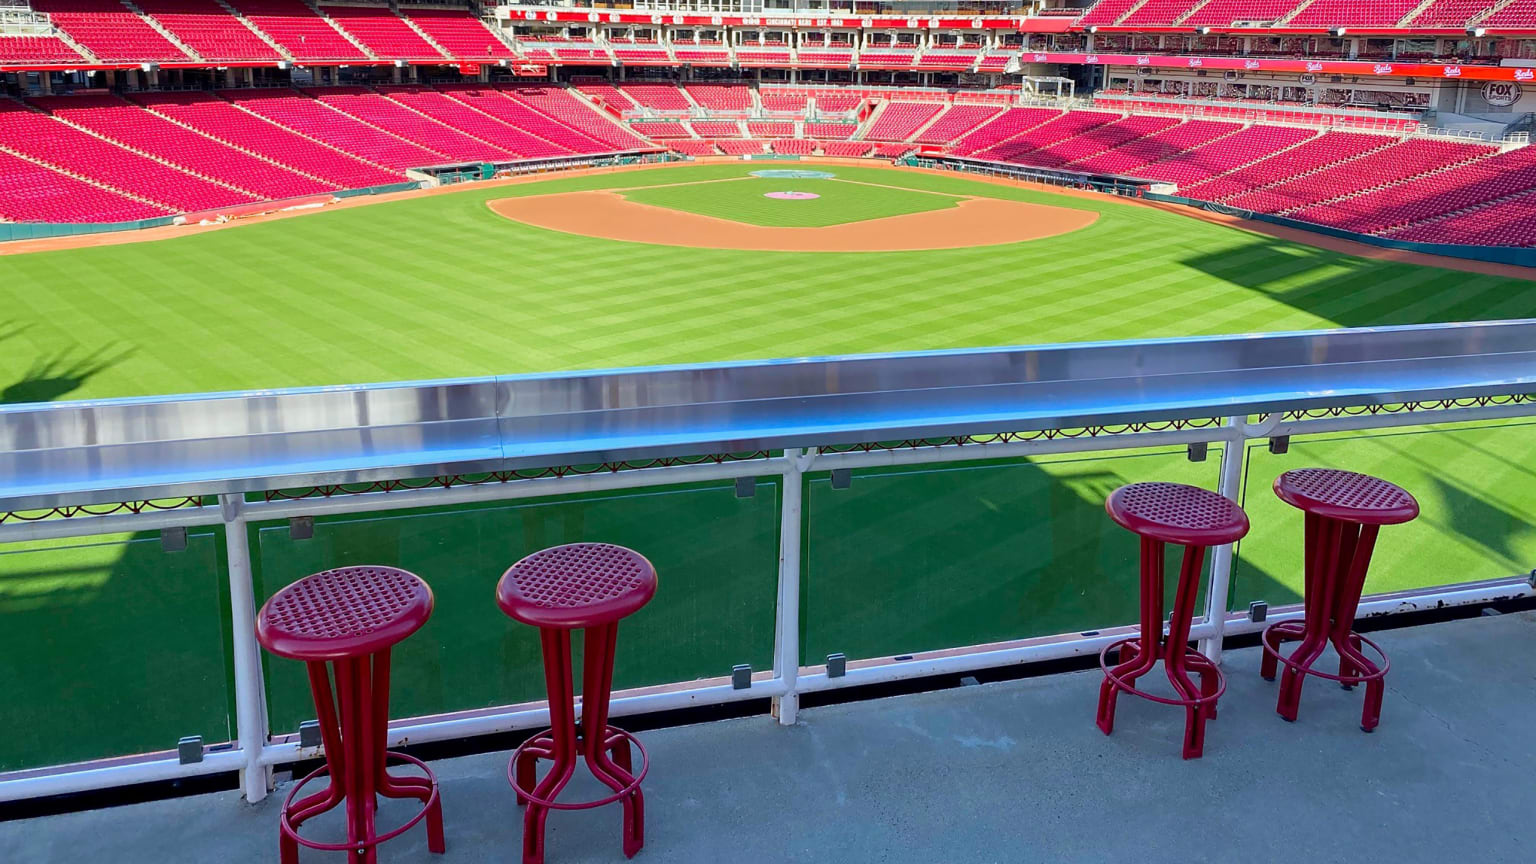 Reds ballpark offers new views, bars for brews